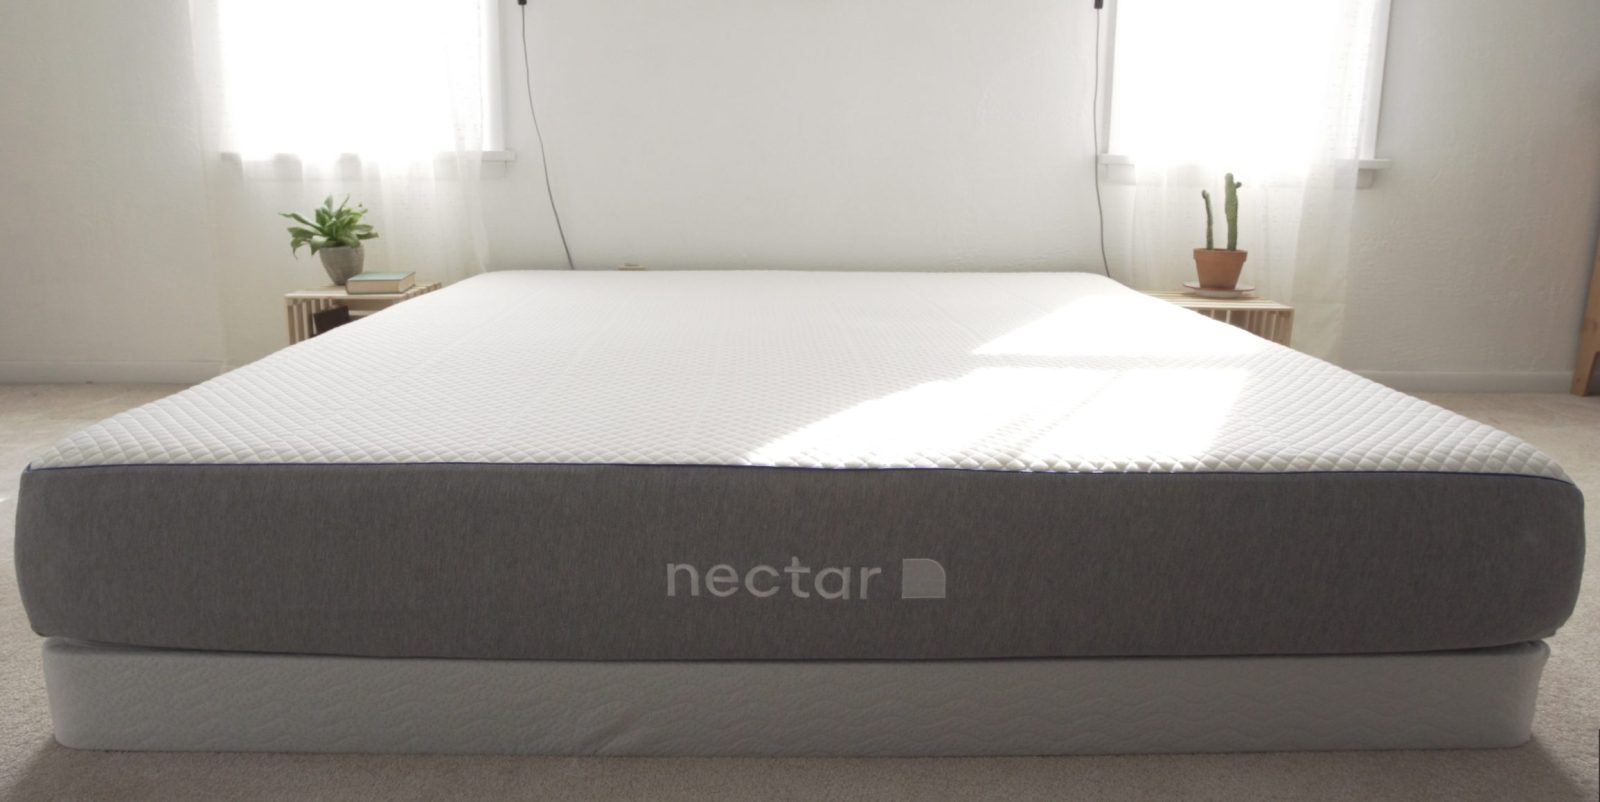 bed in a box nectar mattress